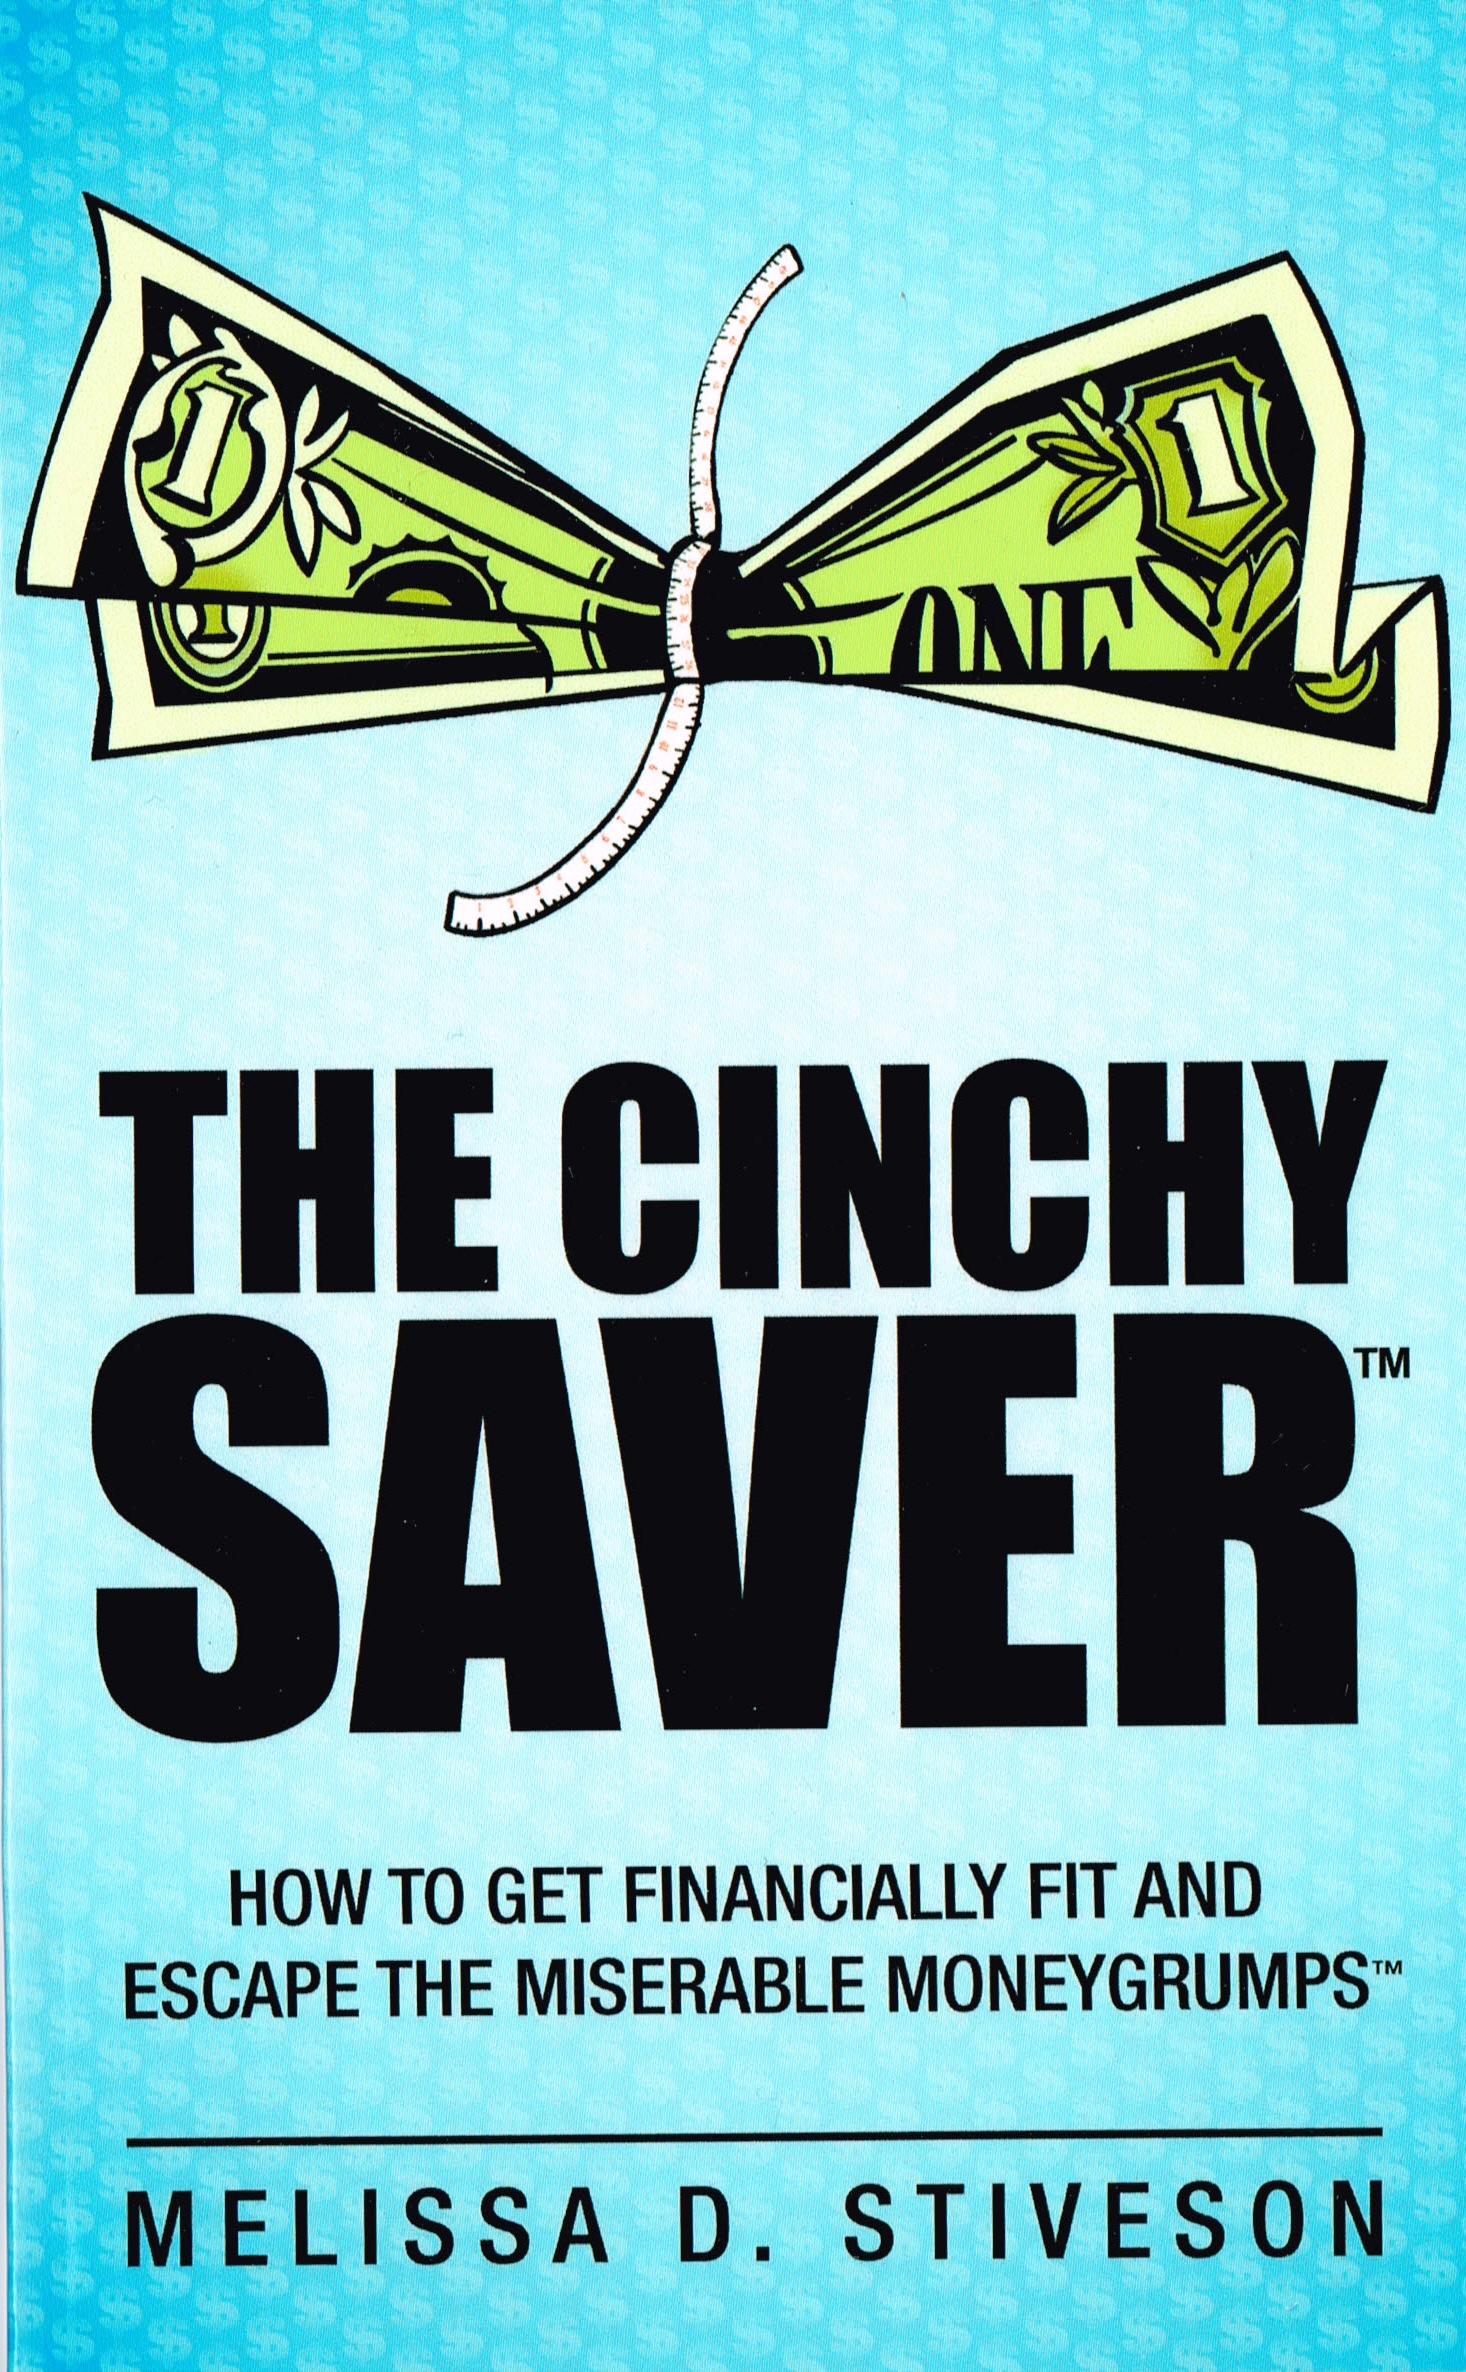 THE CINCHY SAVER™